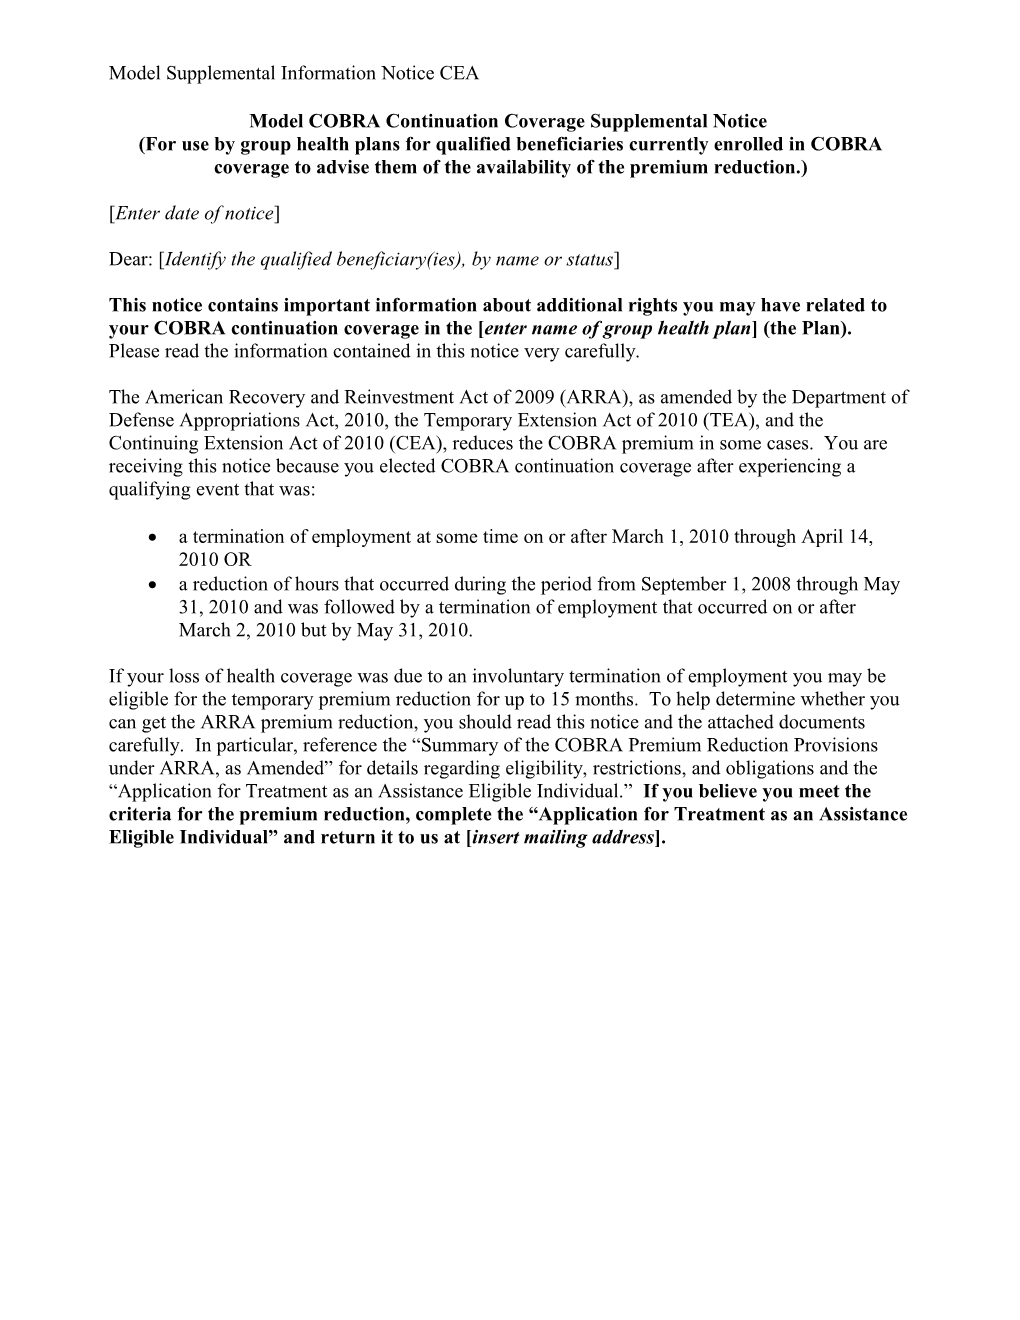 Model COBRA Continuation Coverage Supplemental Notice